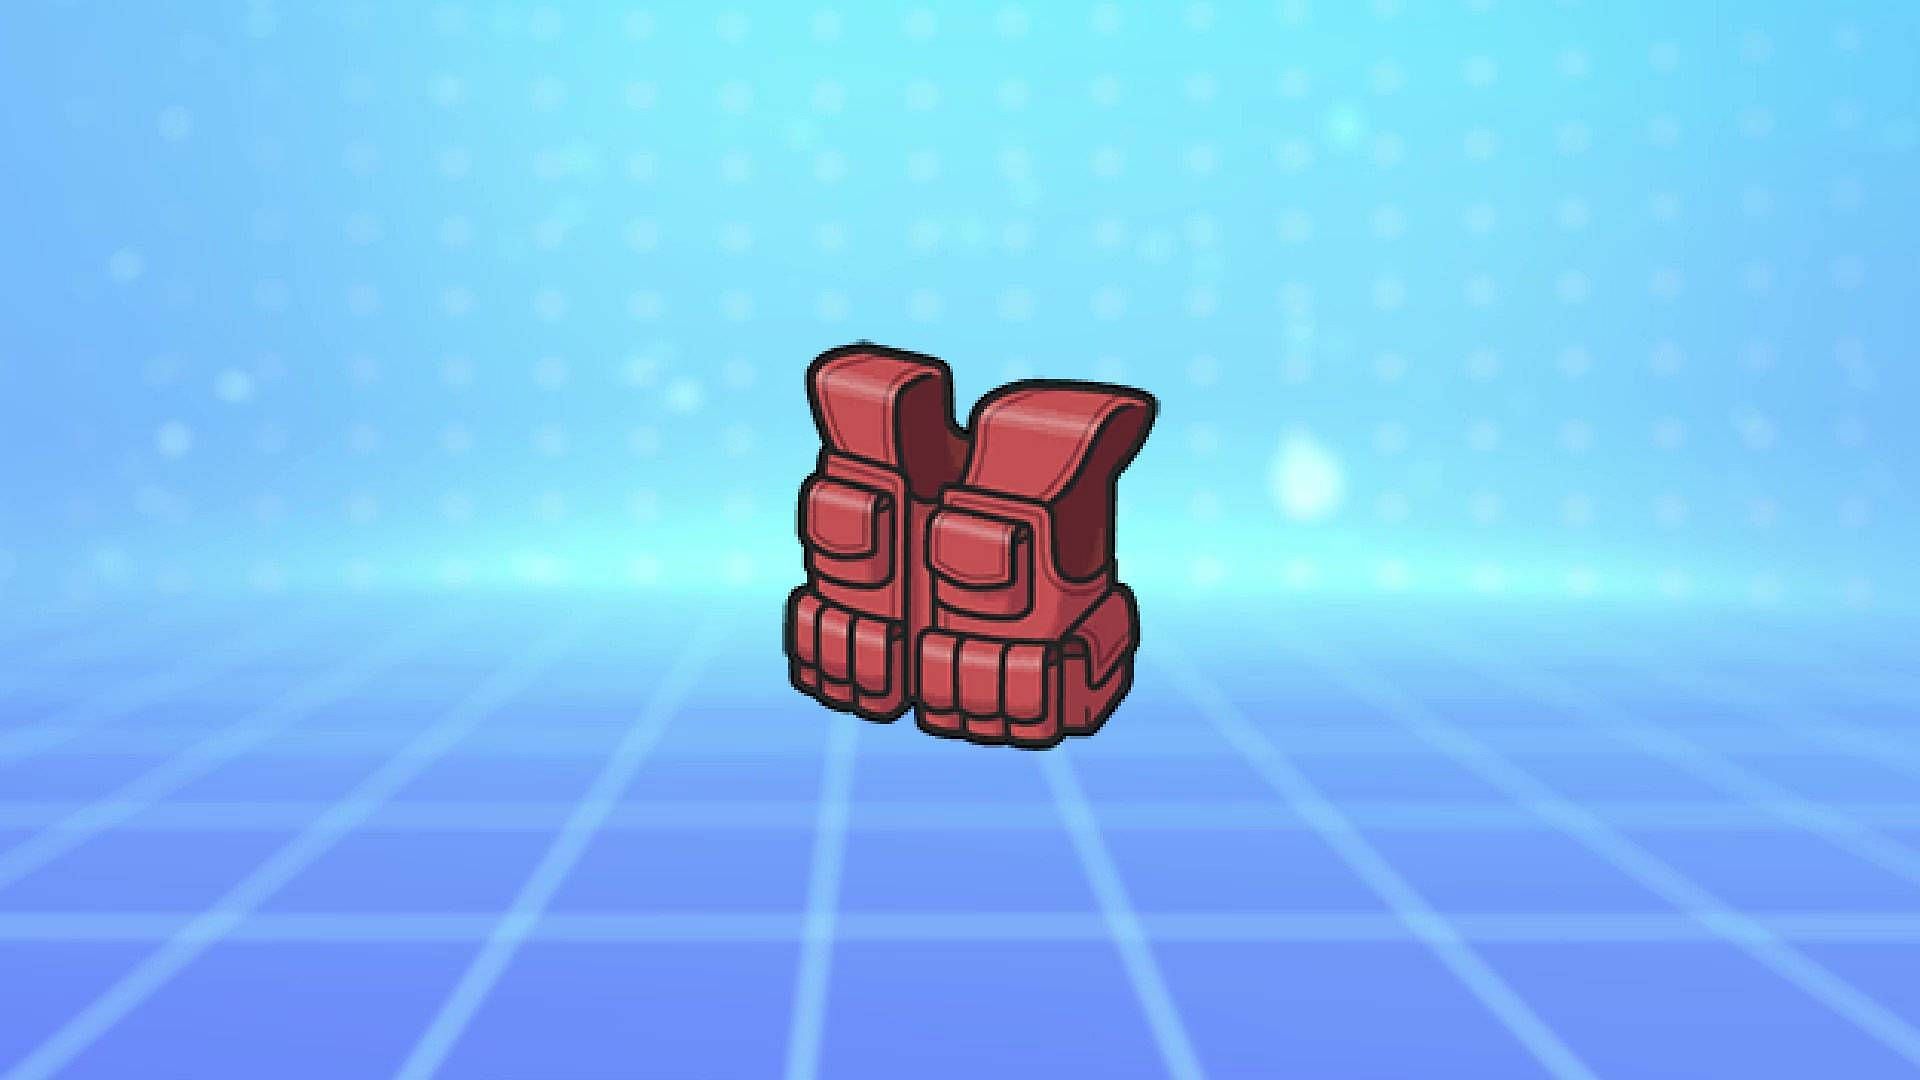 Official artwork for the Assault Vest (Image via The Pokemon Company)